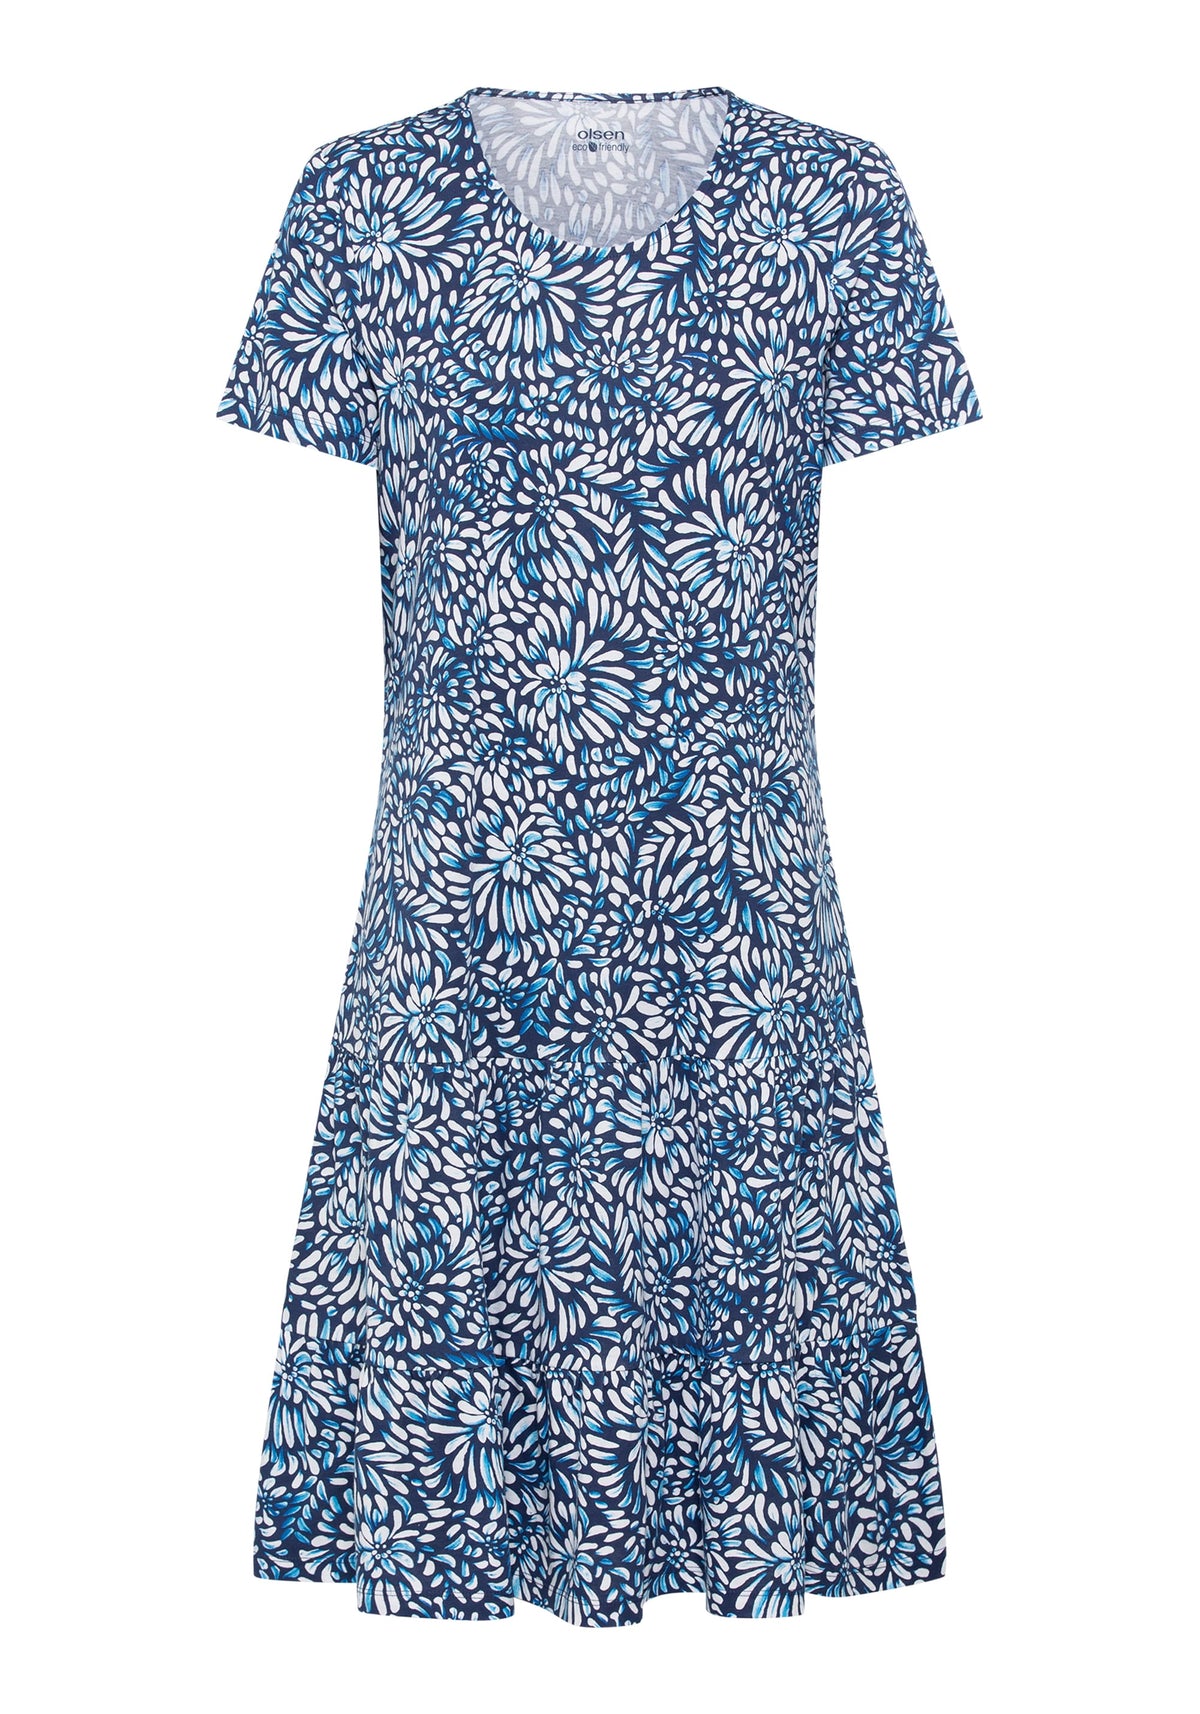 Cotton Blend Short Sleeve Carnation Print Tiered Dress containing TENCEL™ Modal